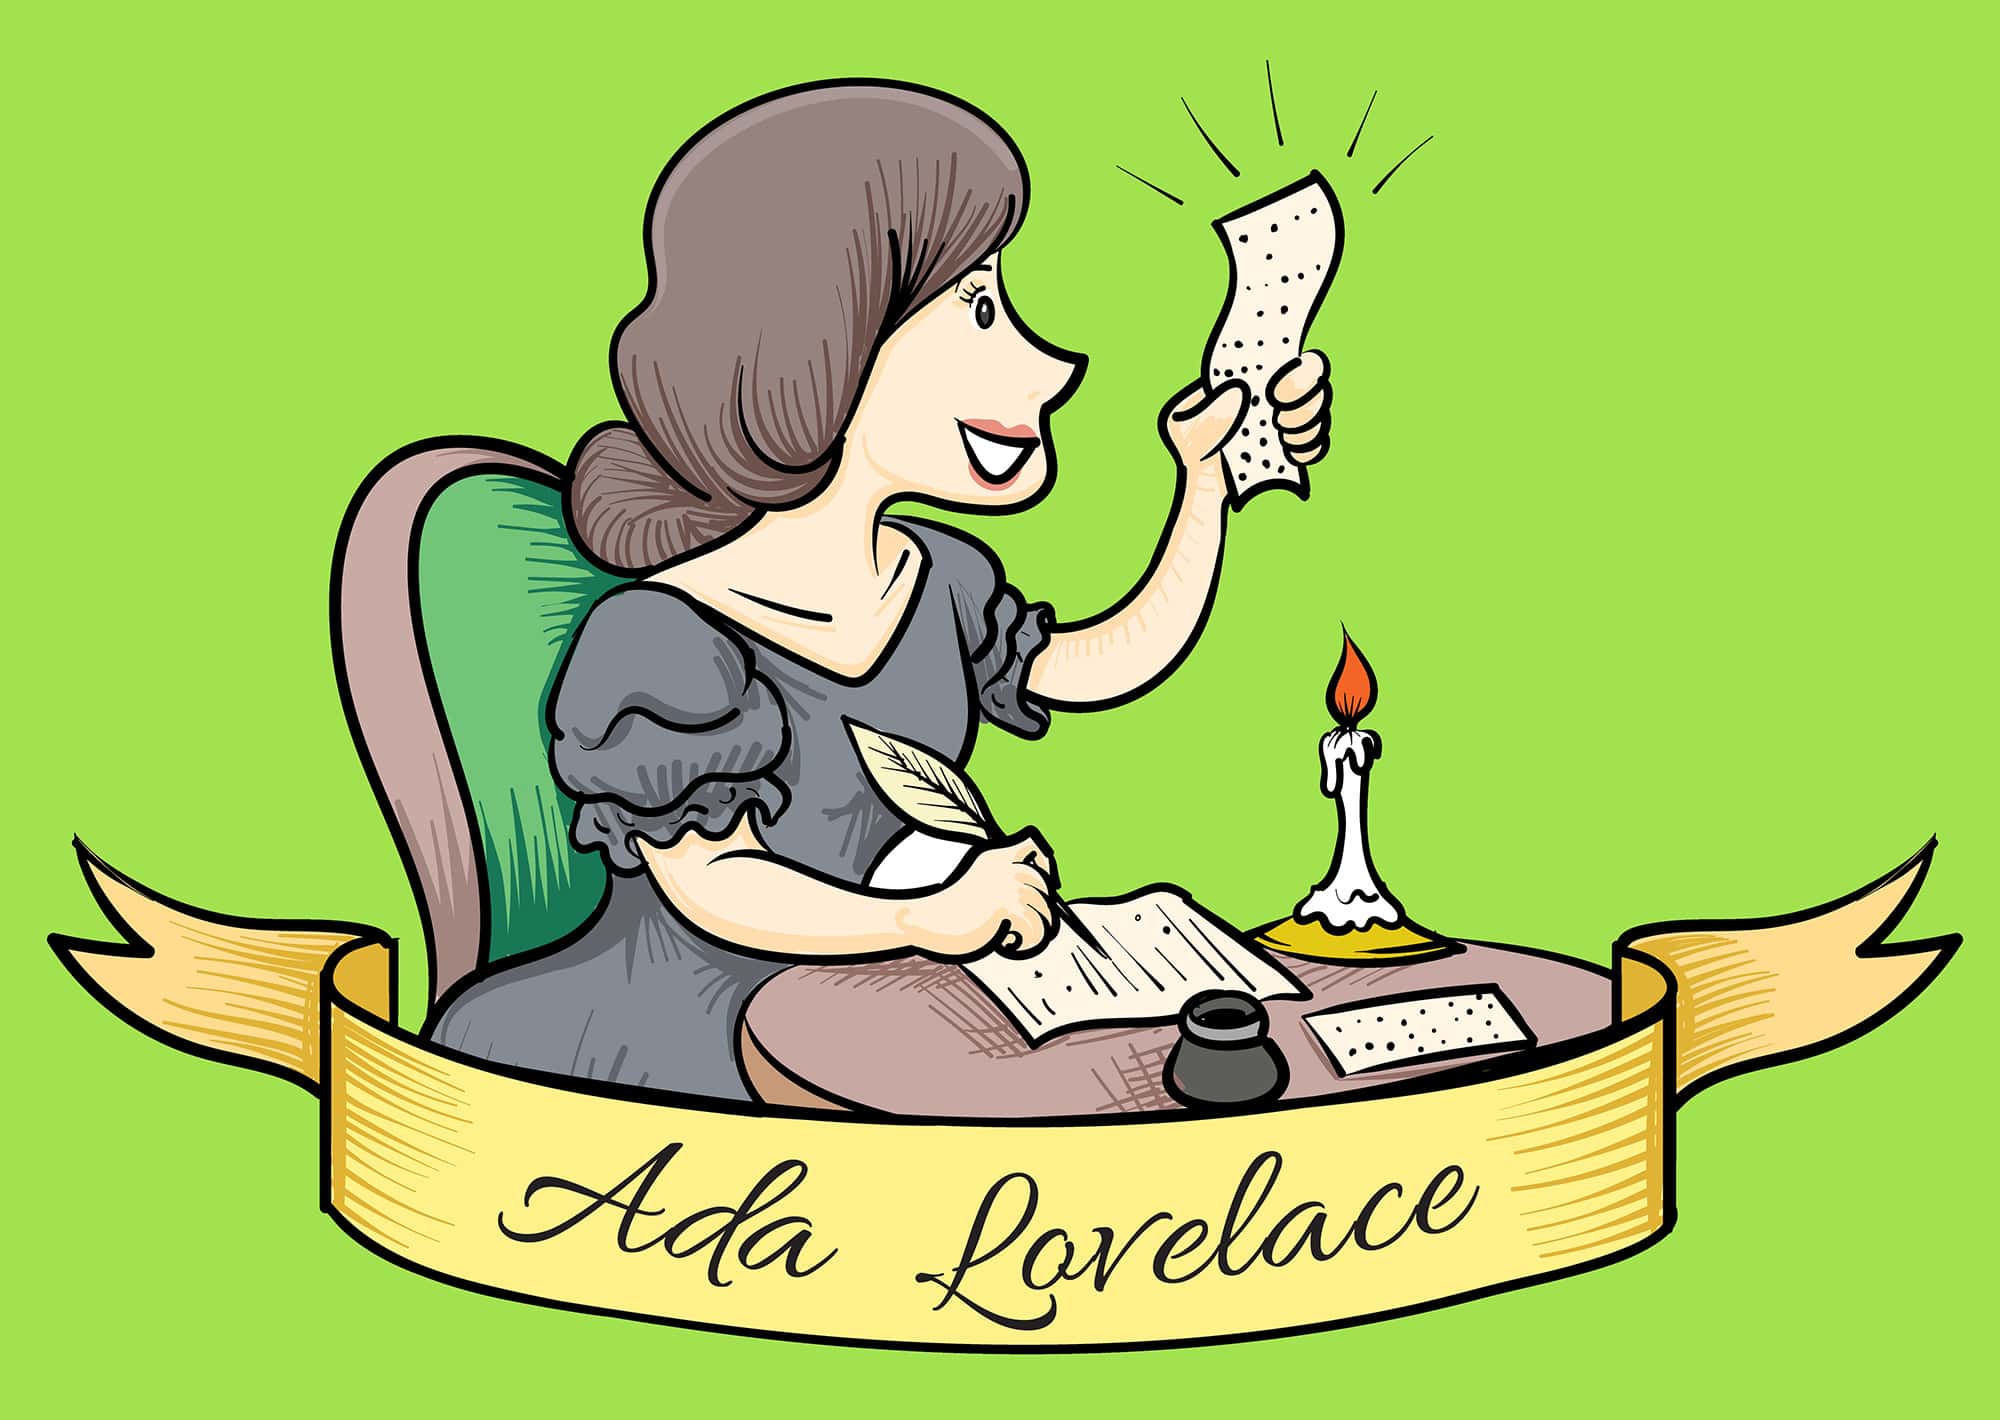 Ada Lovelace facts